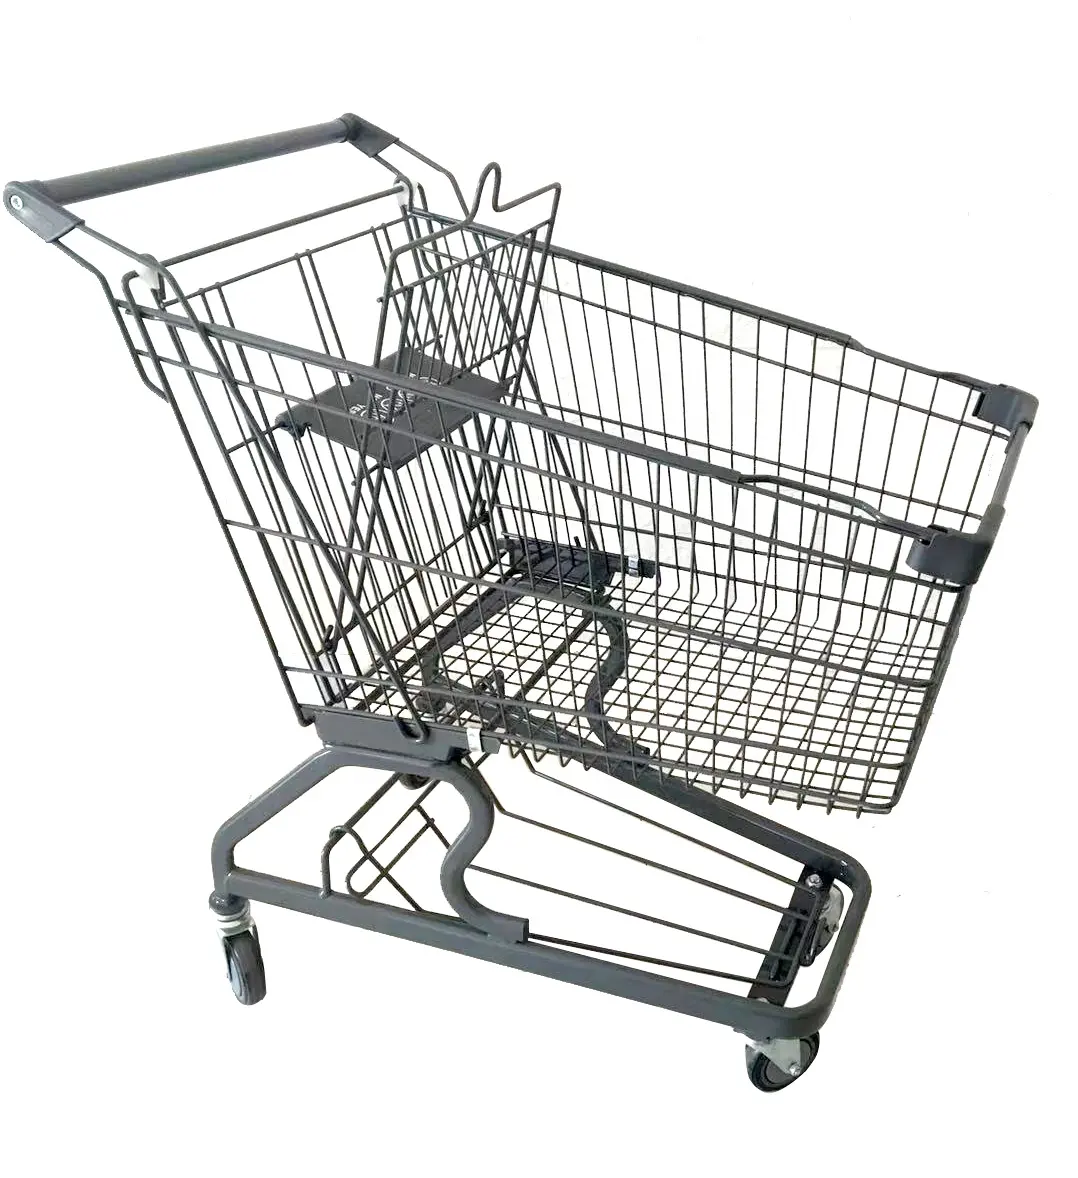 High quality German supermarket shopping cart